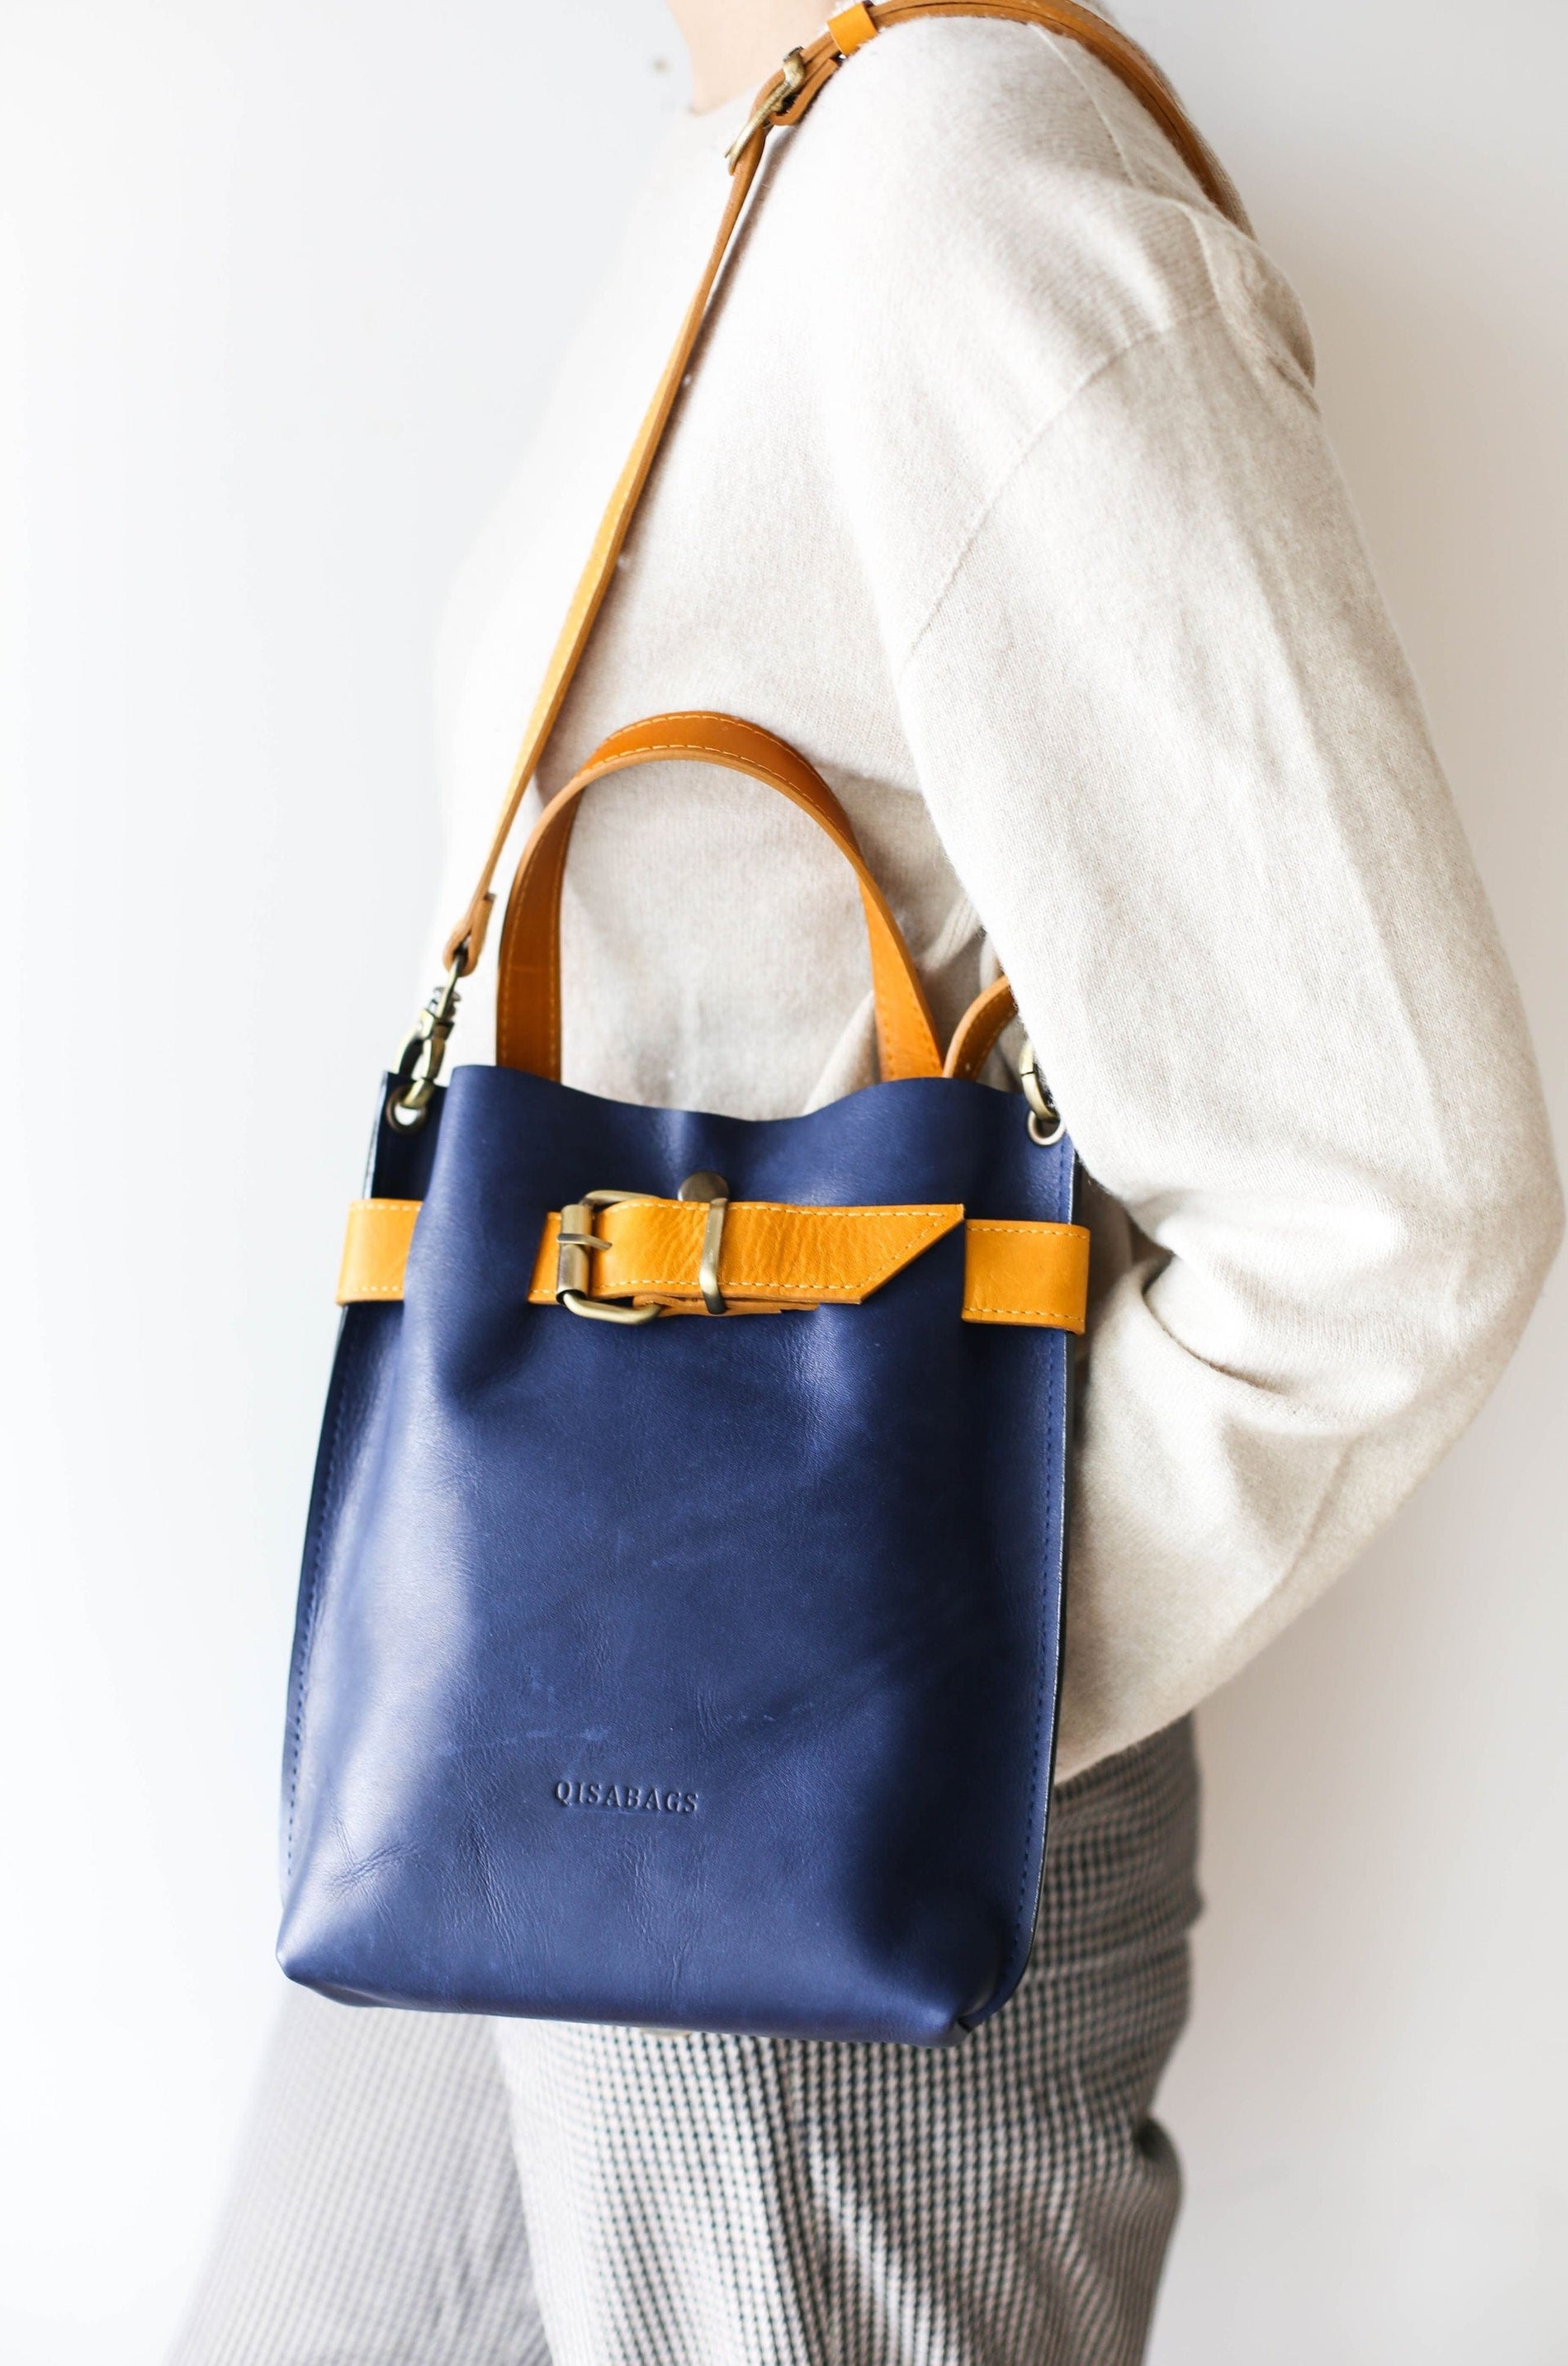 designer leather handbag